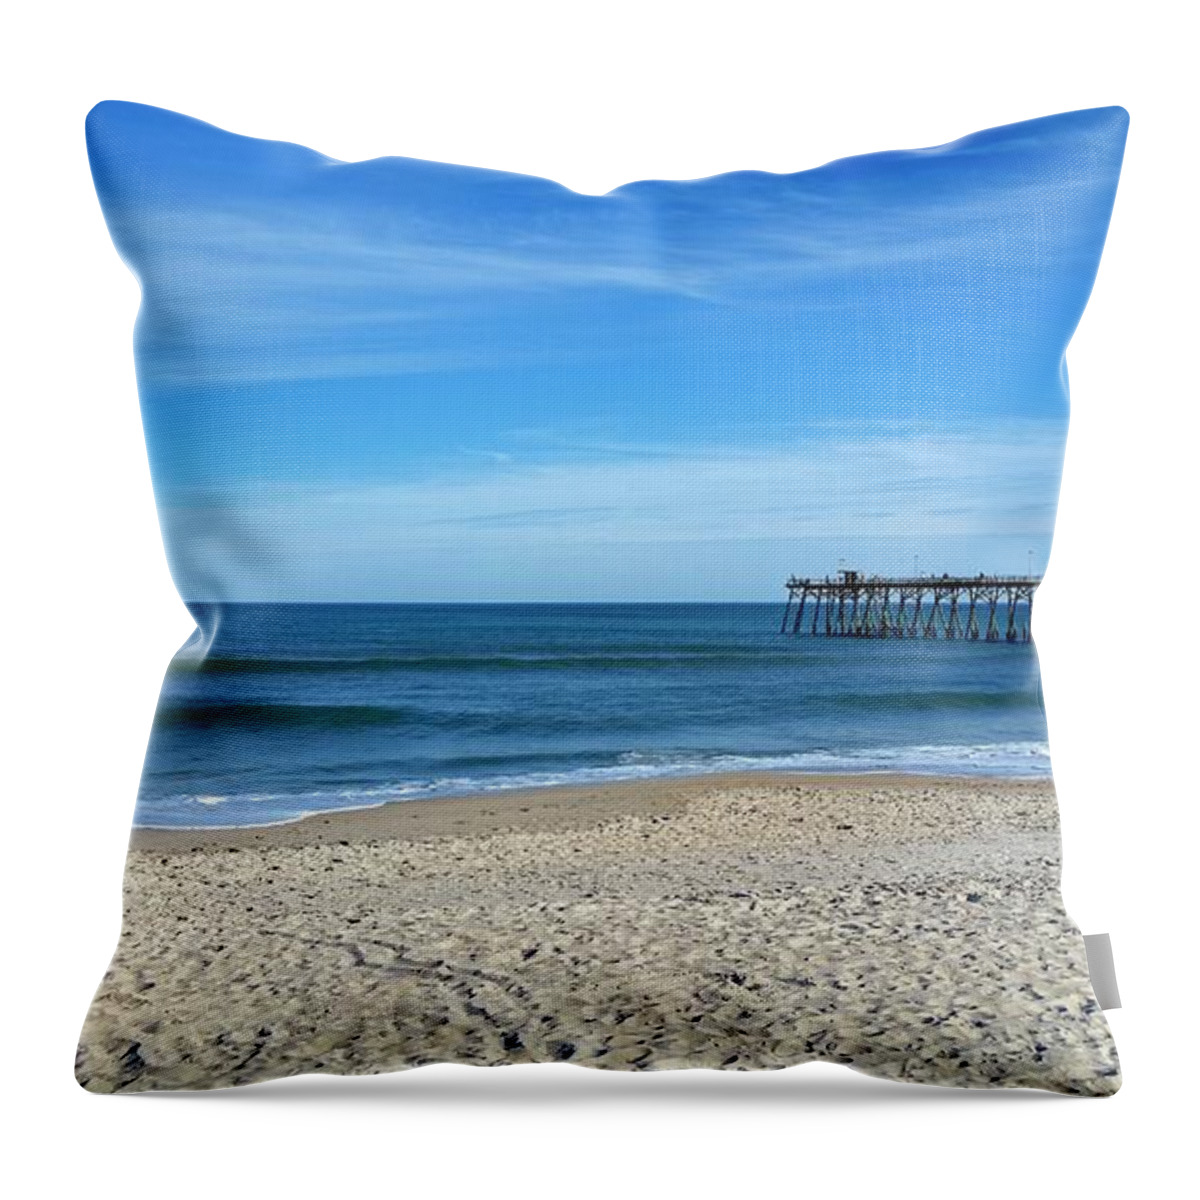 Kure Beach North Carolina Throw Pillow featuring the photograph Kure Beach by Rick Nelson